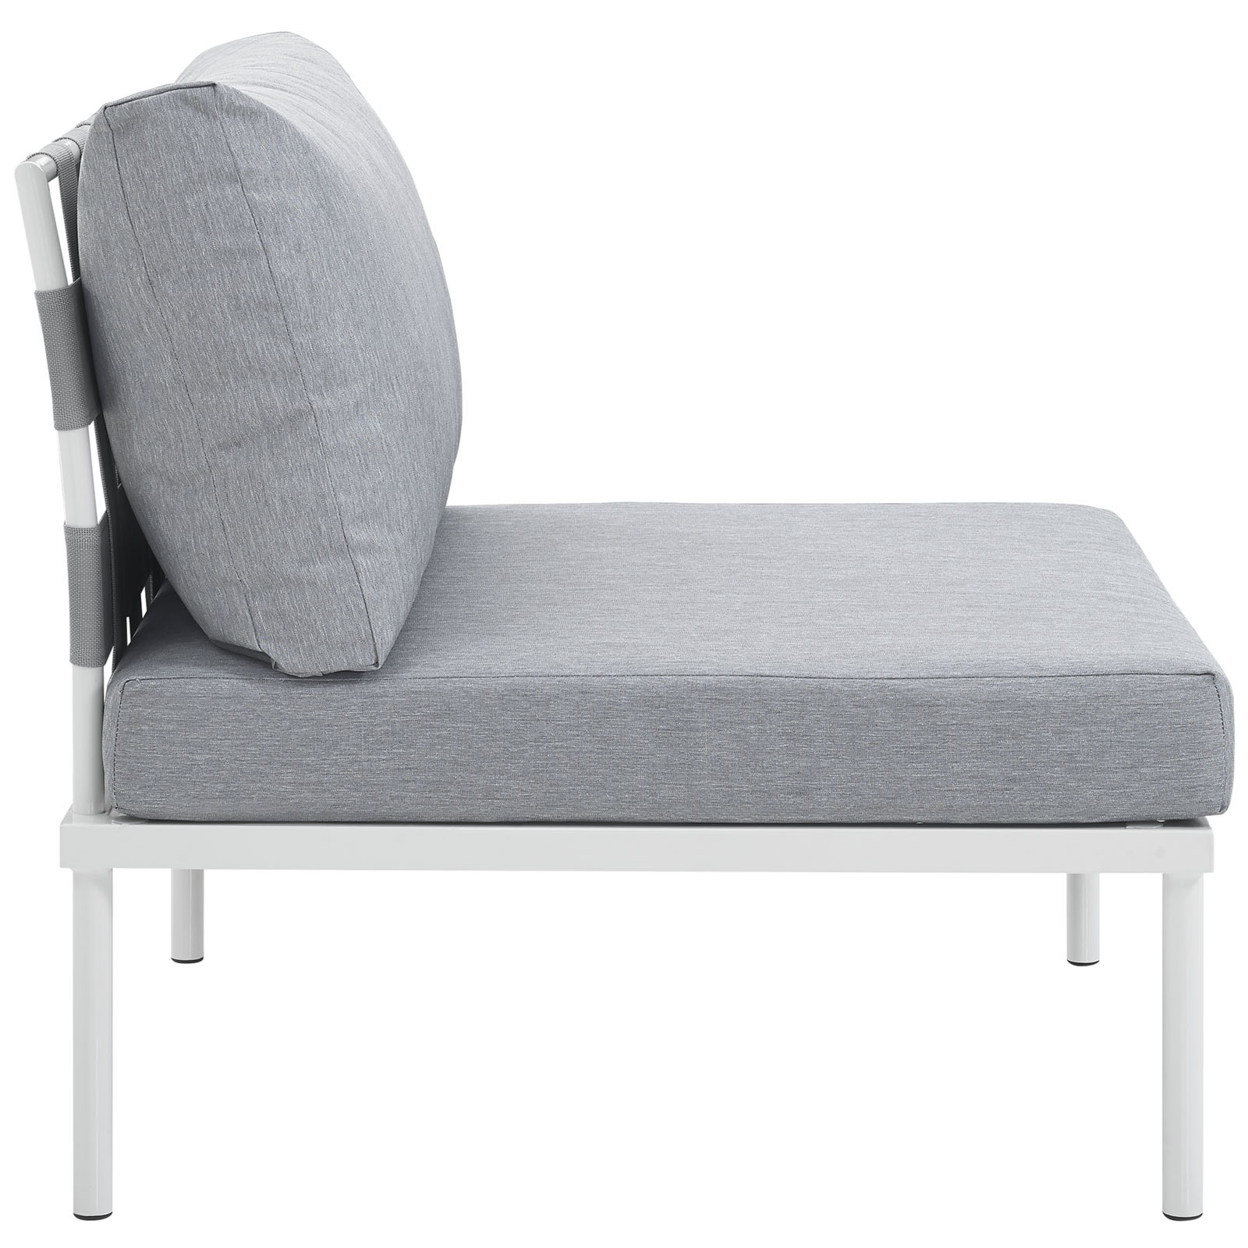 Harmony Armless Outdoor Patio Aluminum Chair White Gray - image 2 of 5